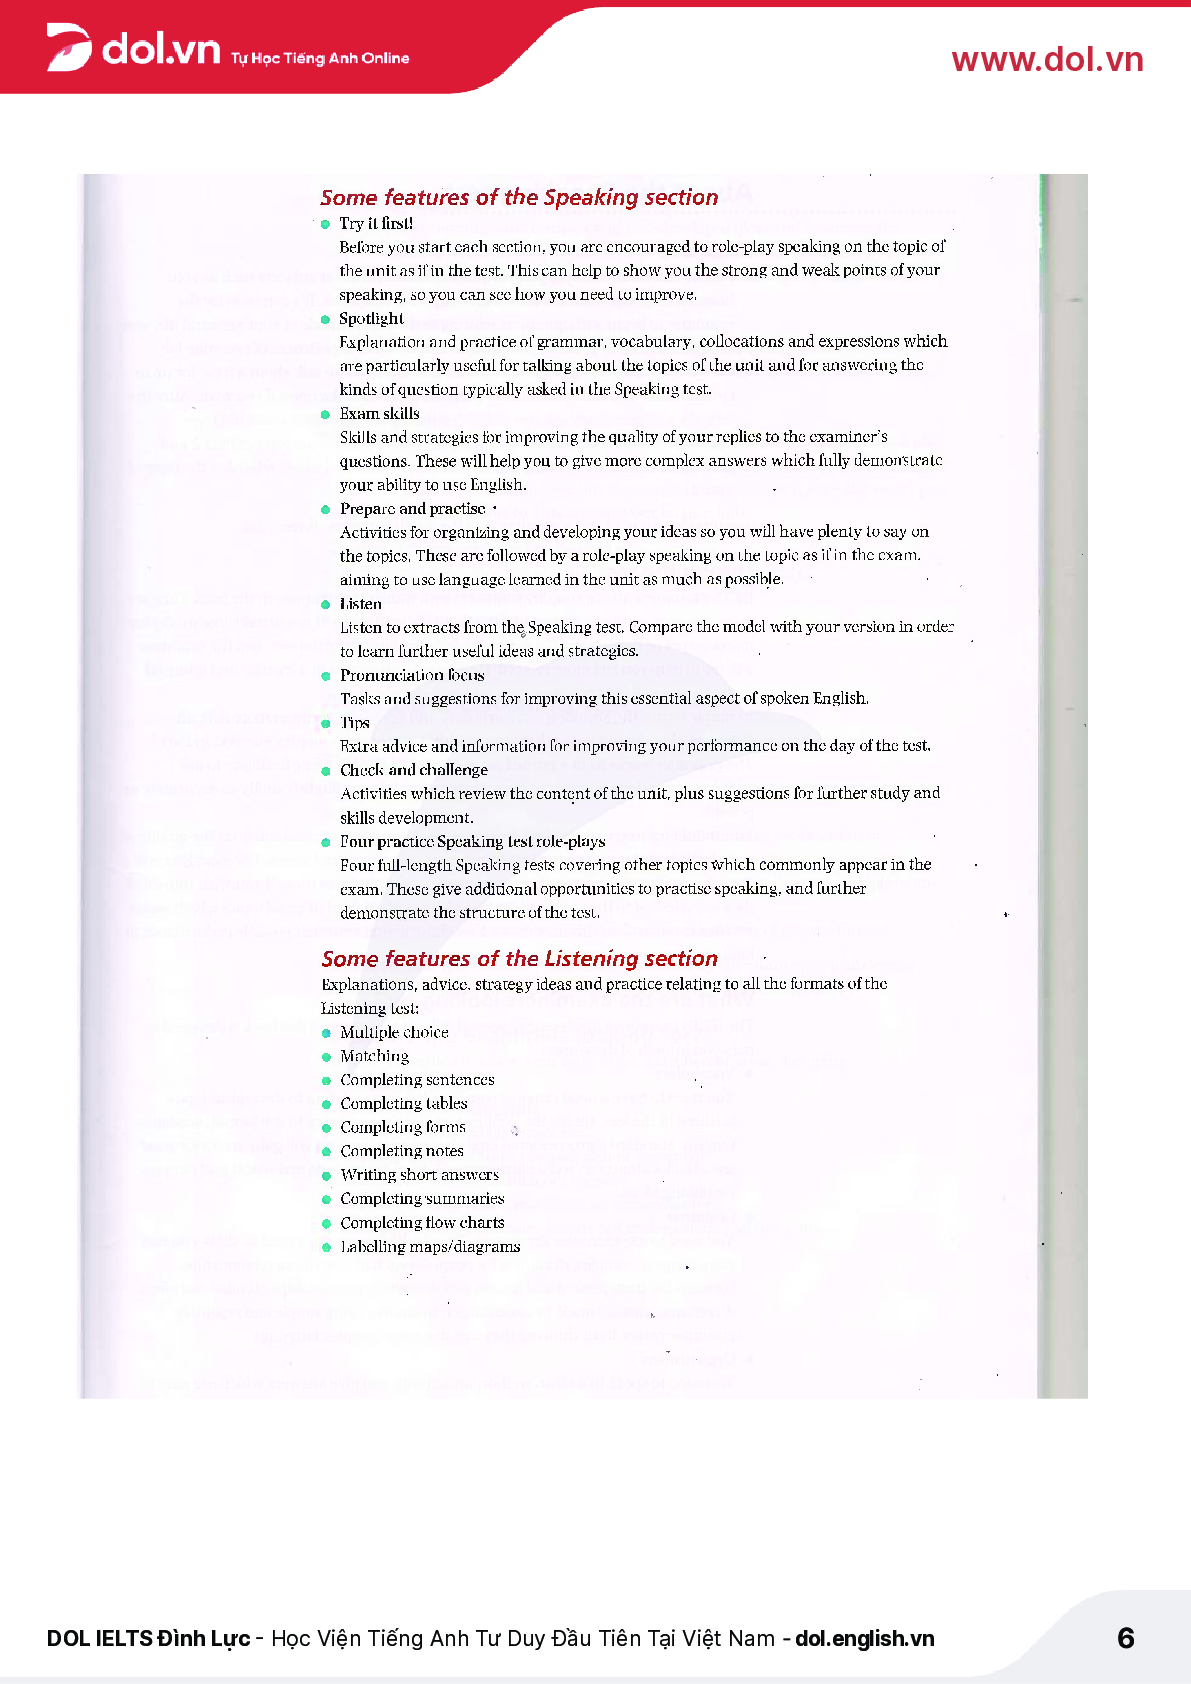 Sách IELTS Advantage Speaking & Listening Skills pdf | Xem online, tải PDF miễn phí (trang 6)